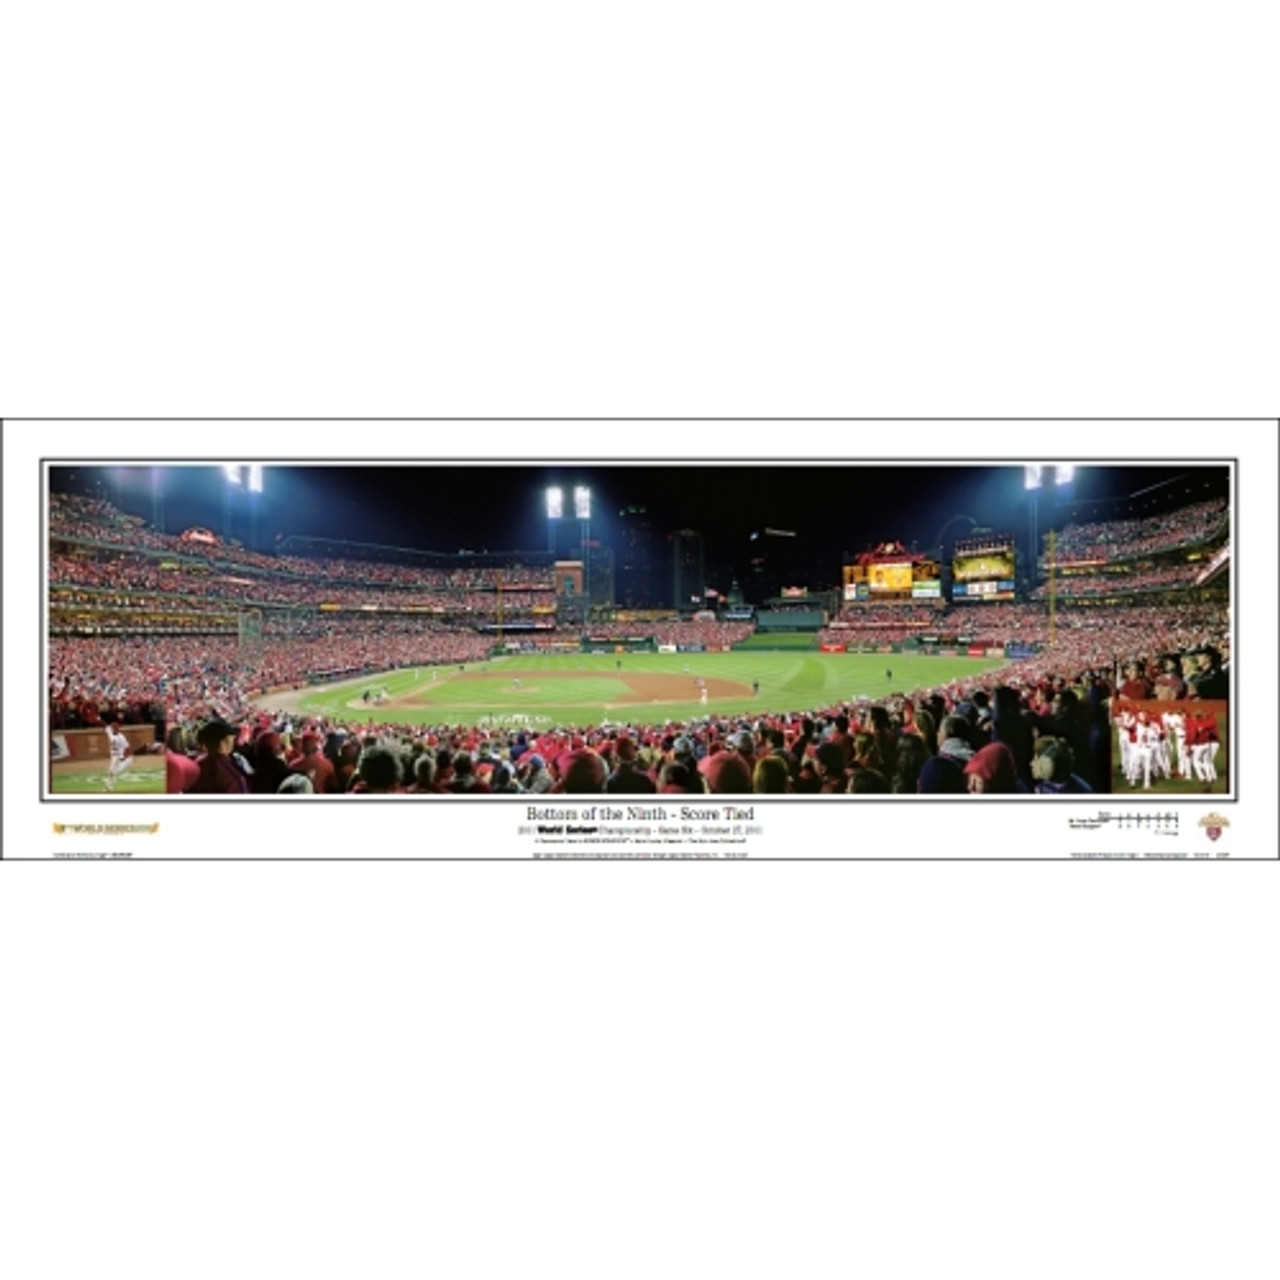 St. Louis Cardinals Panoramic Poster - 2011 World Series